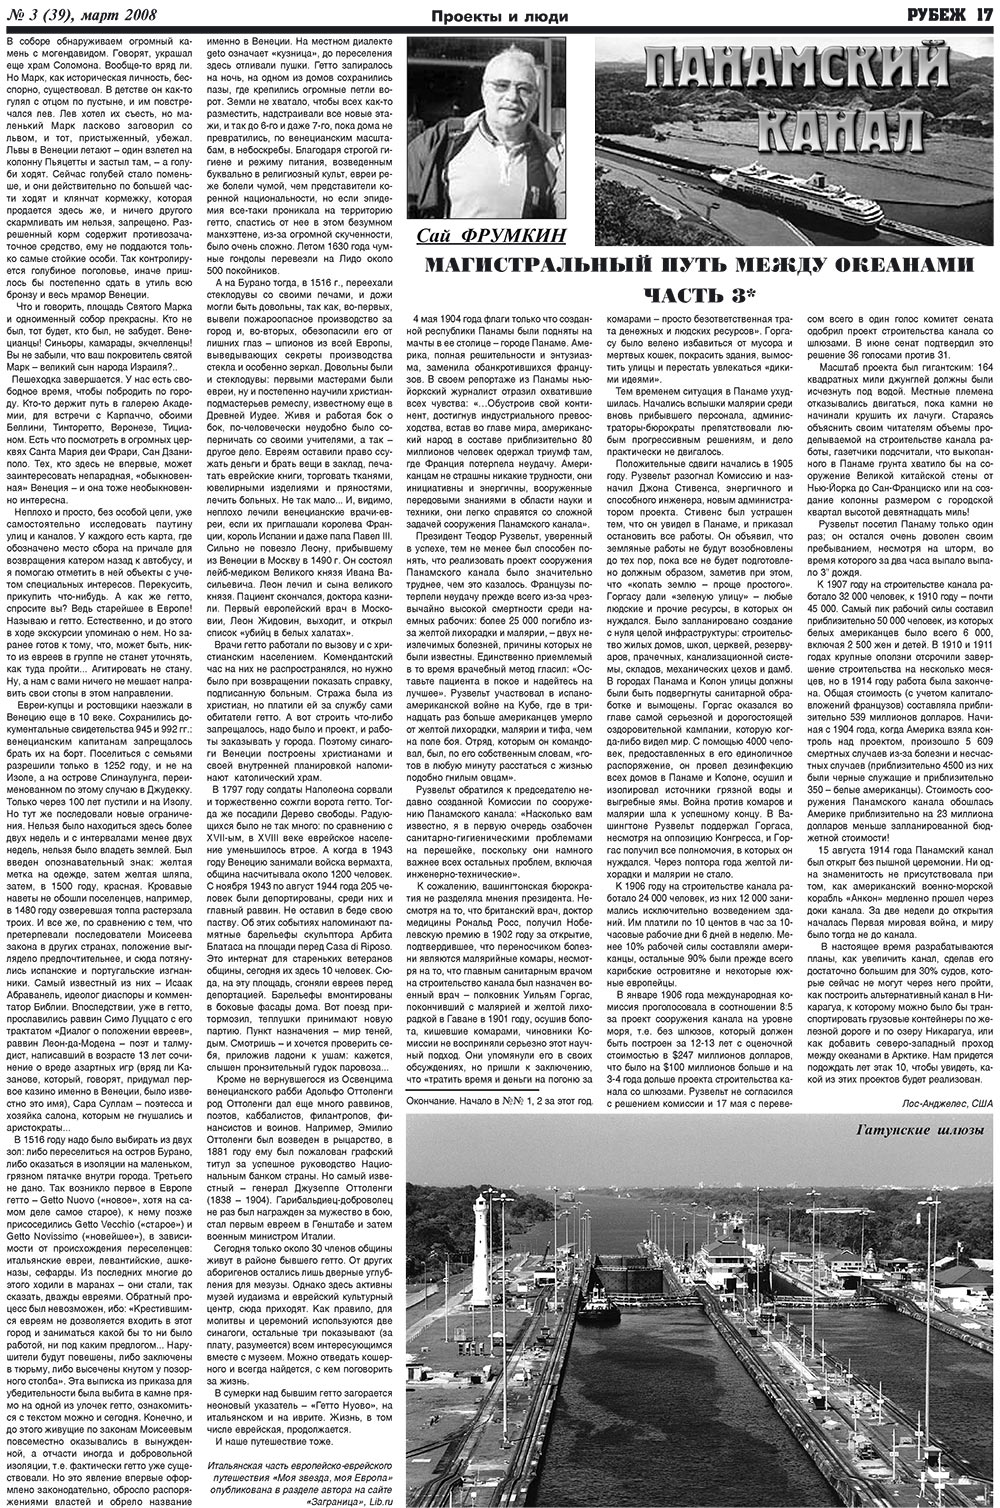 Рубеж, газета. 2008 №3 стр.17